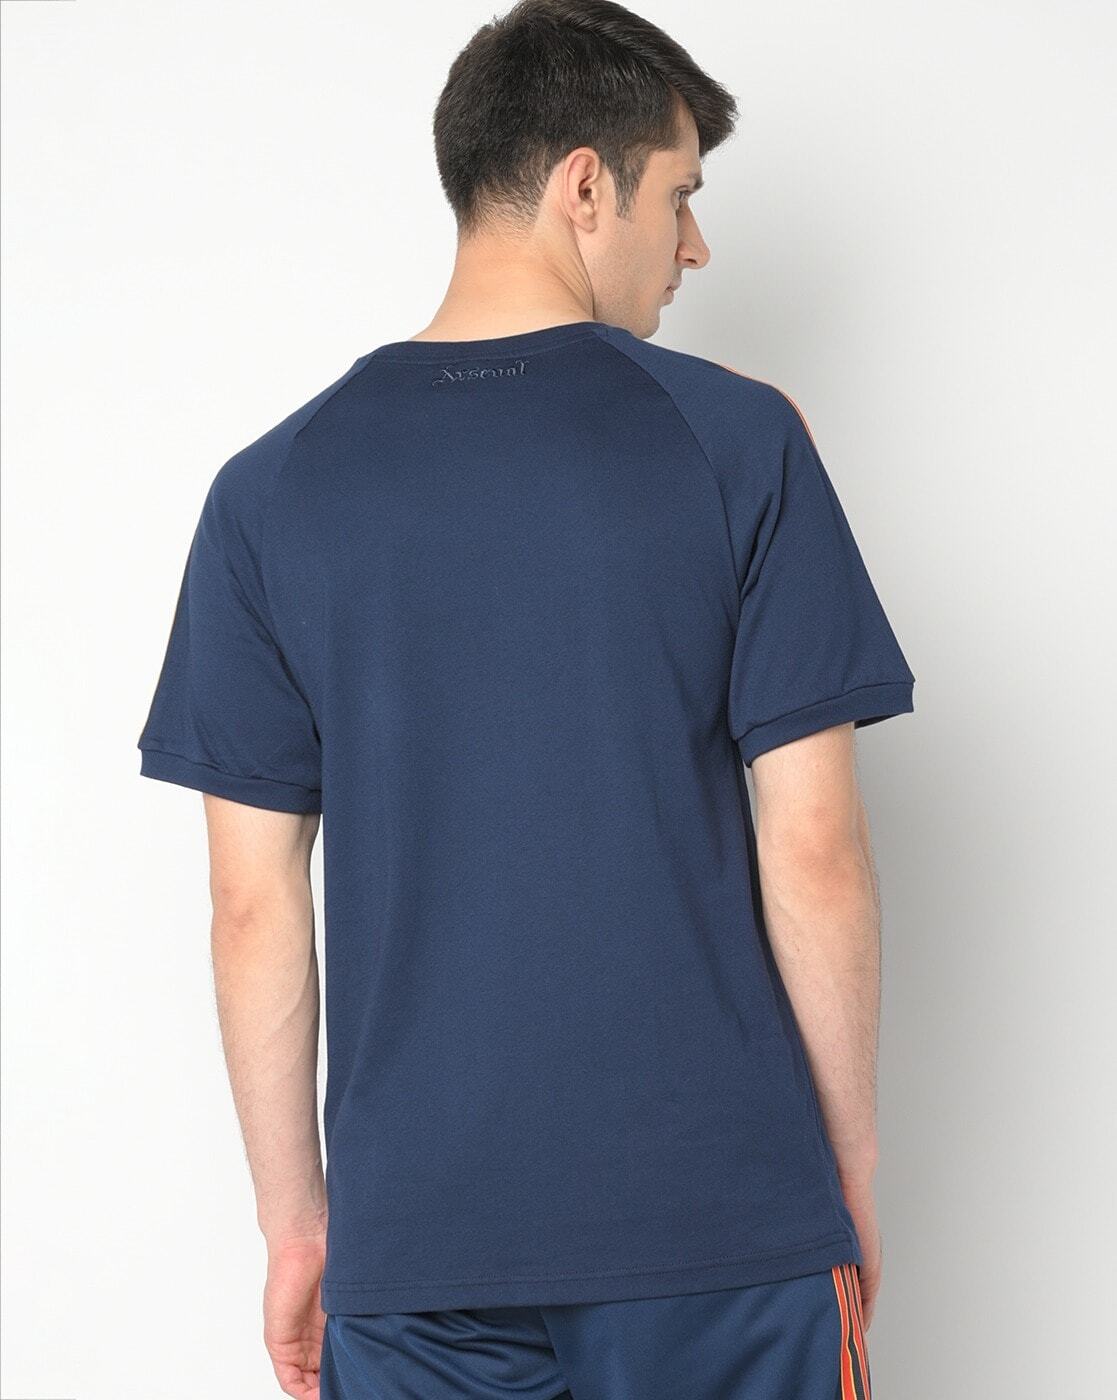 Brand Print Crew-Neck T-shirt-Hm4828